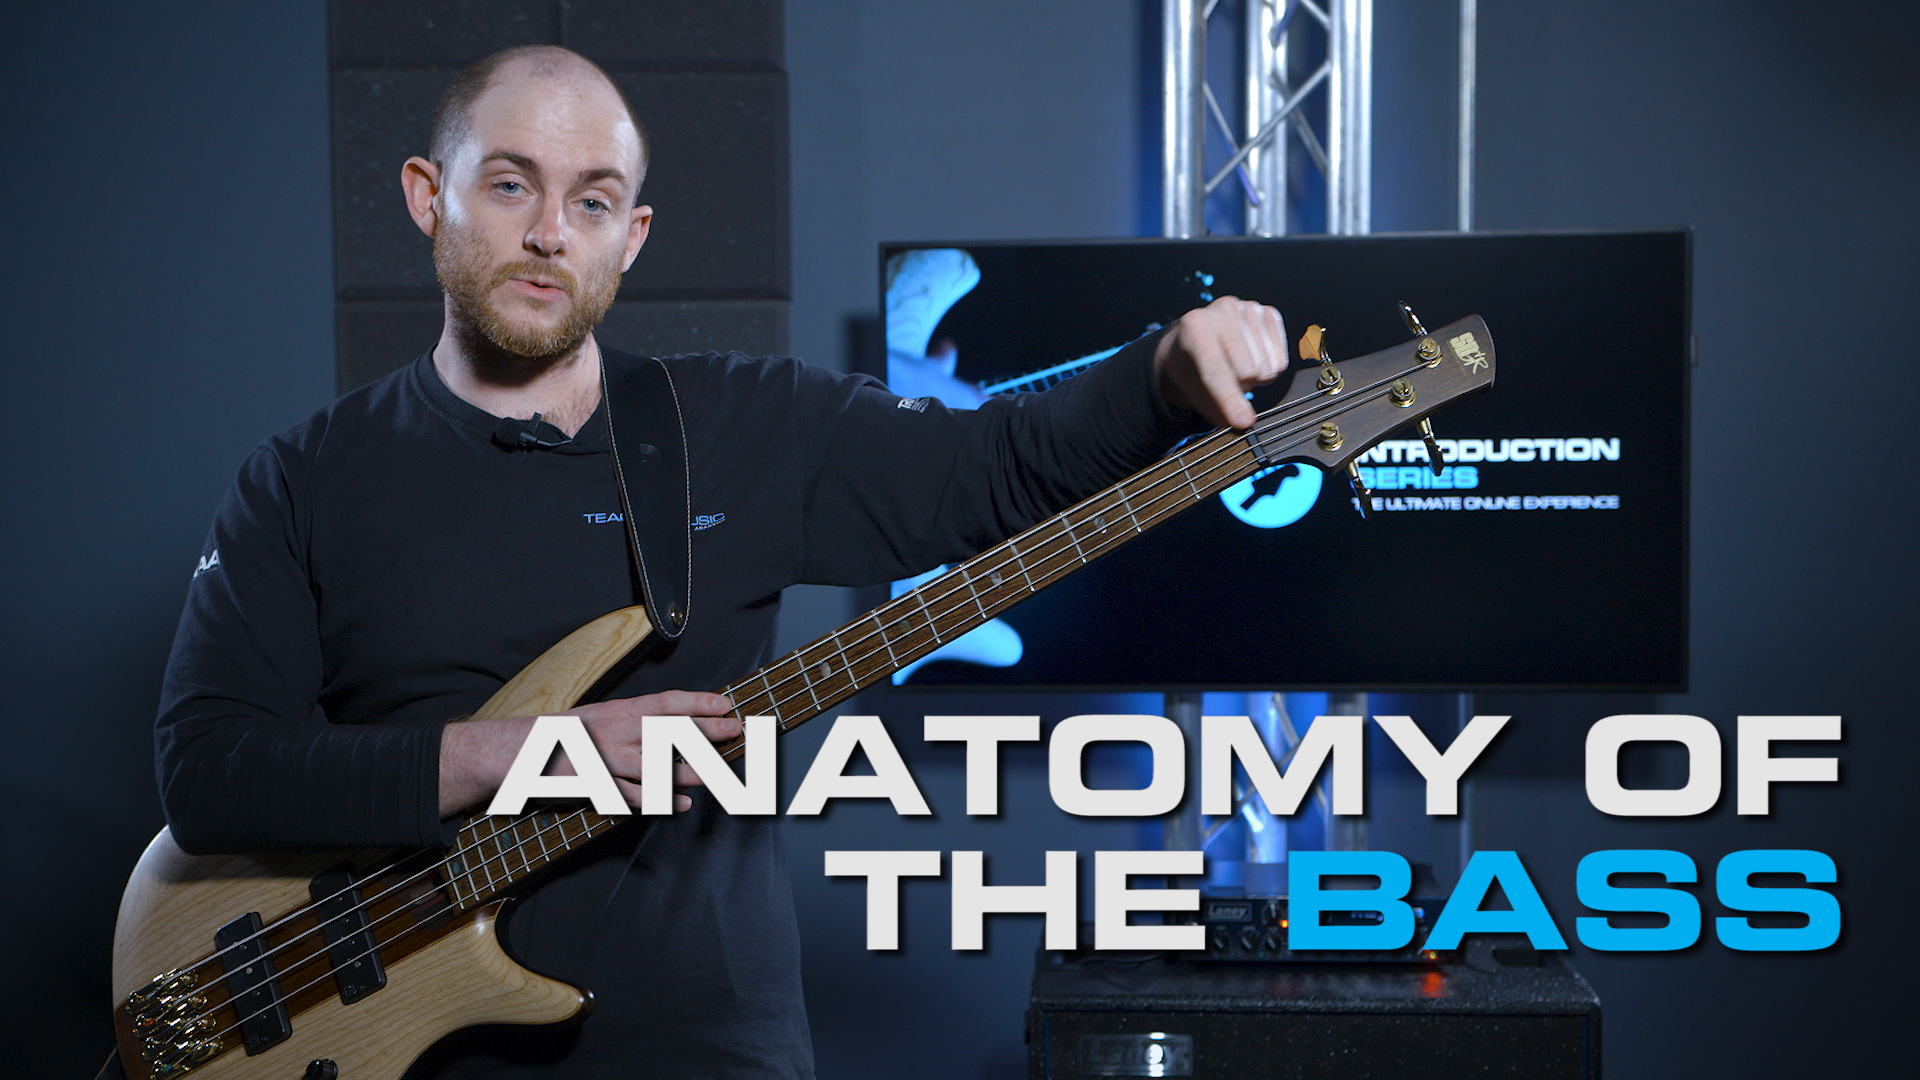 Anatomy of a bass